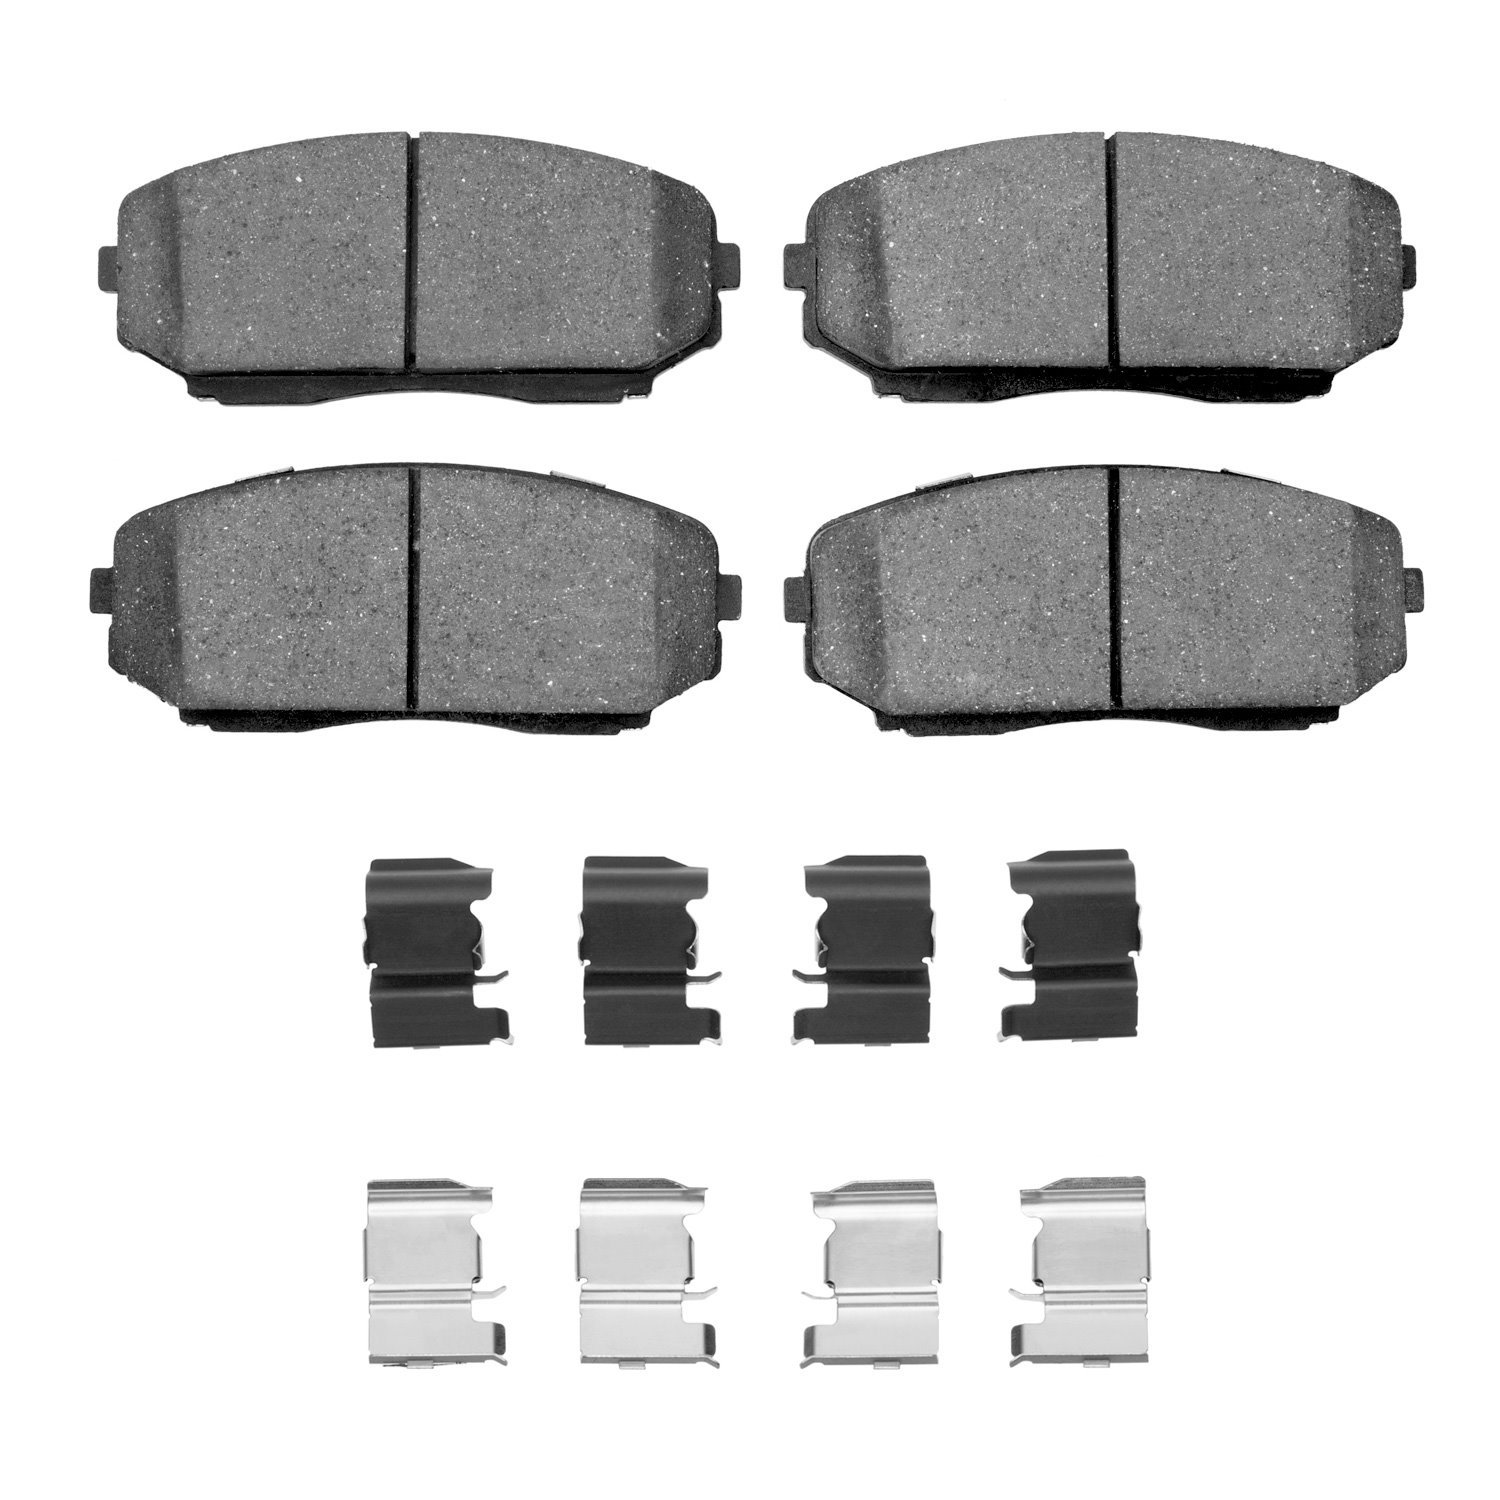 1311-1258-01 3000-Series Semi-Metallic Brake Pads & Hardware Kit, Fits Select Ford/Lincoln/Mercury/Mazda, Position: Front